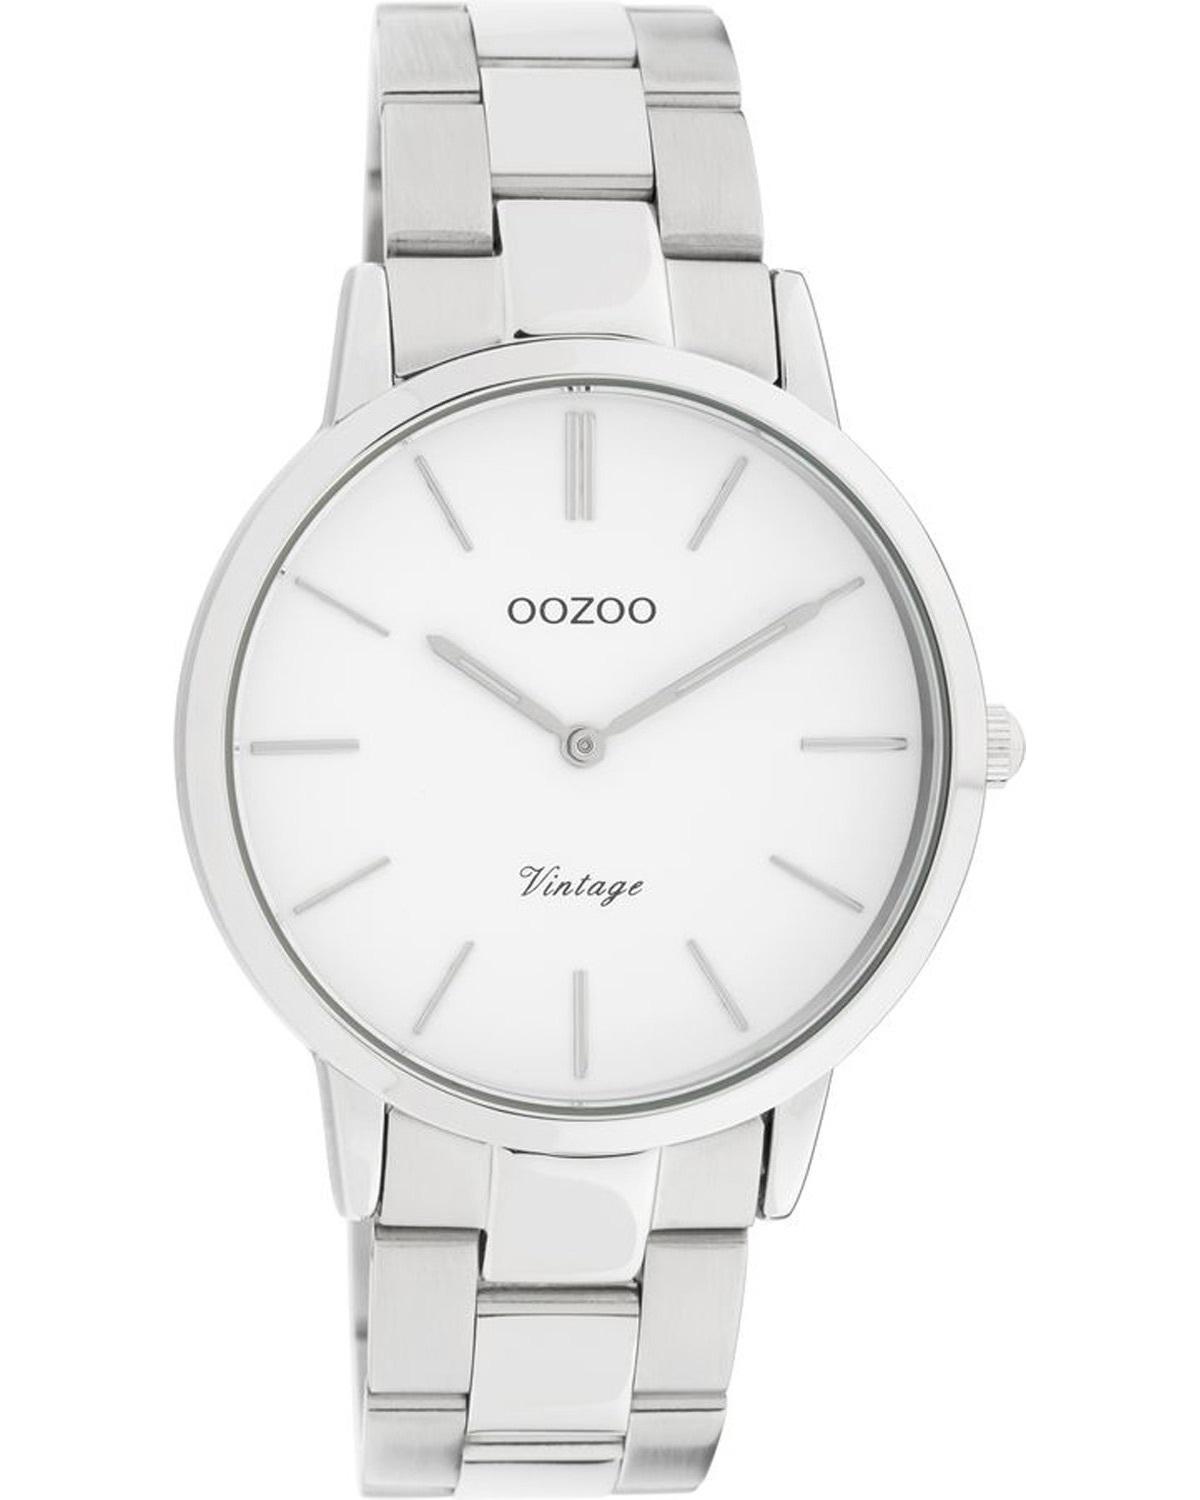 OOZOO Vintage - C20026, Silver case with Stainless Steel Bracelet 23536